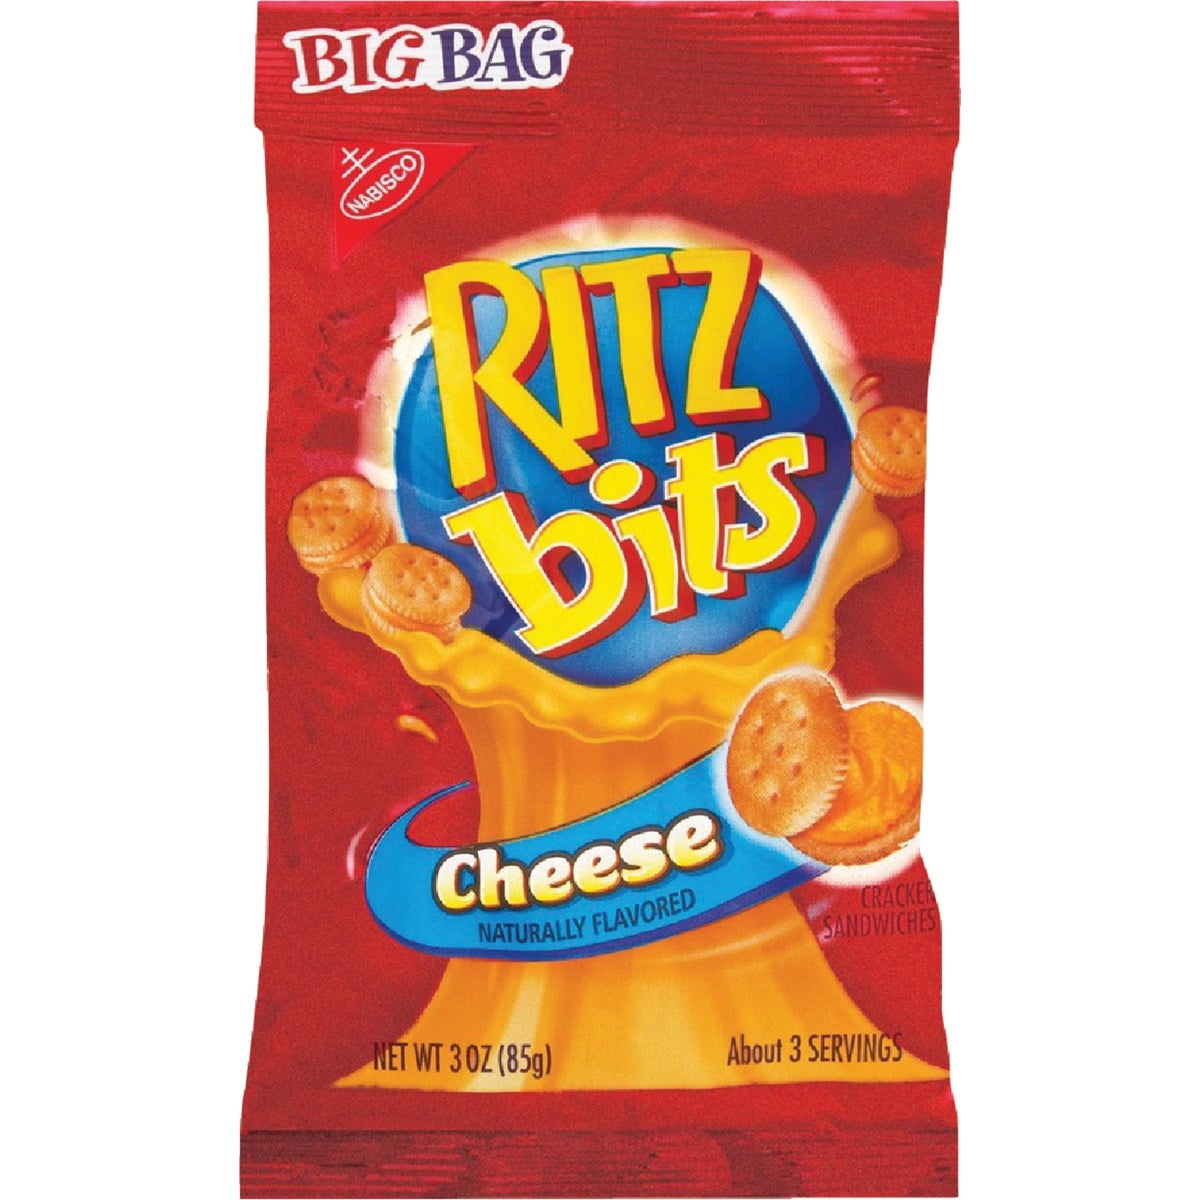 Item 970727, Convenient Big Bag 3-ounce size of Cheese Ritz Bits sandwich crackers.